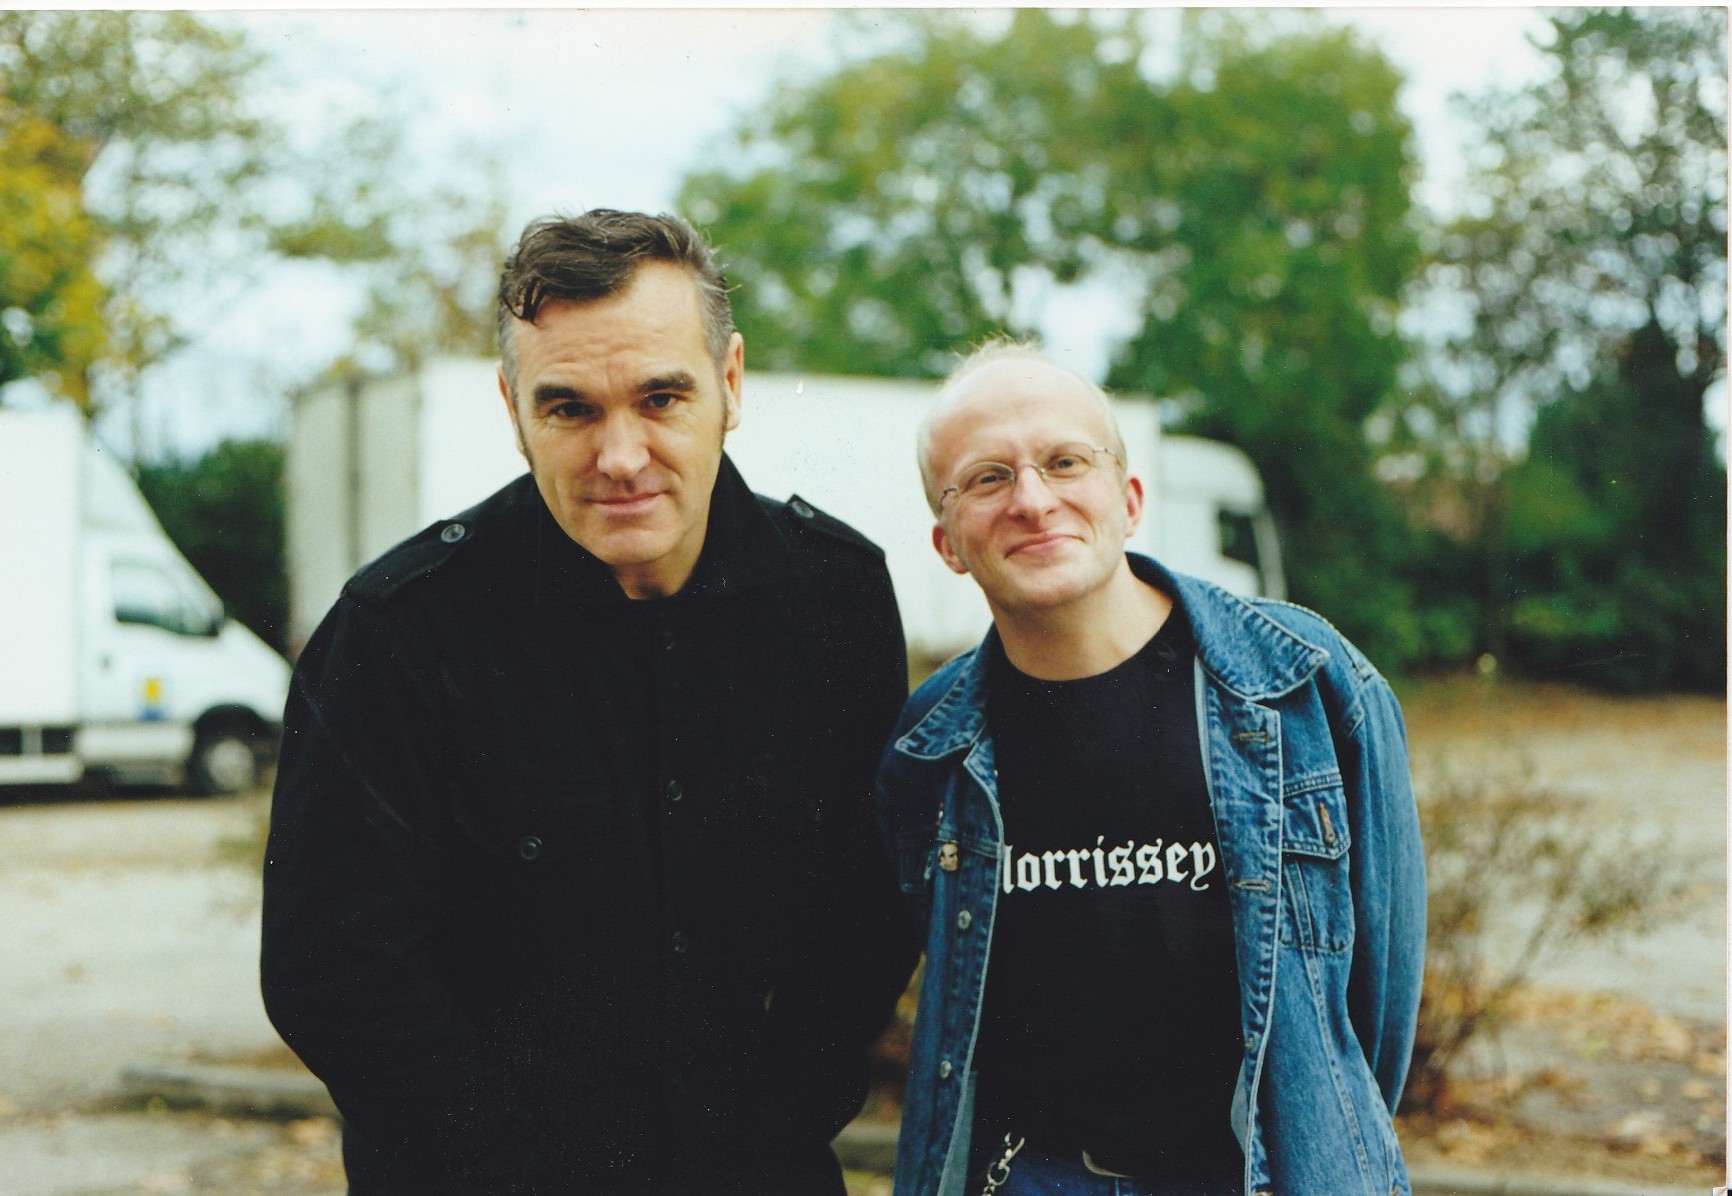 Morrissey &amp; me @ Lyon (France), 2002